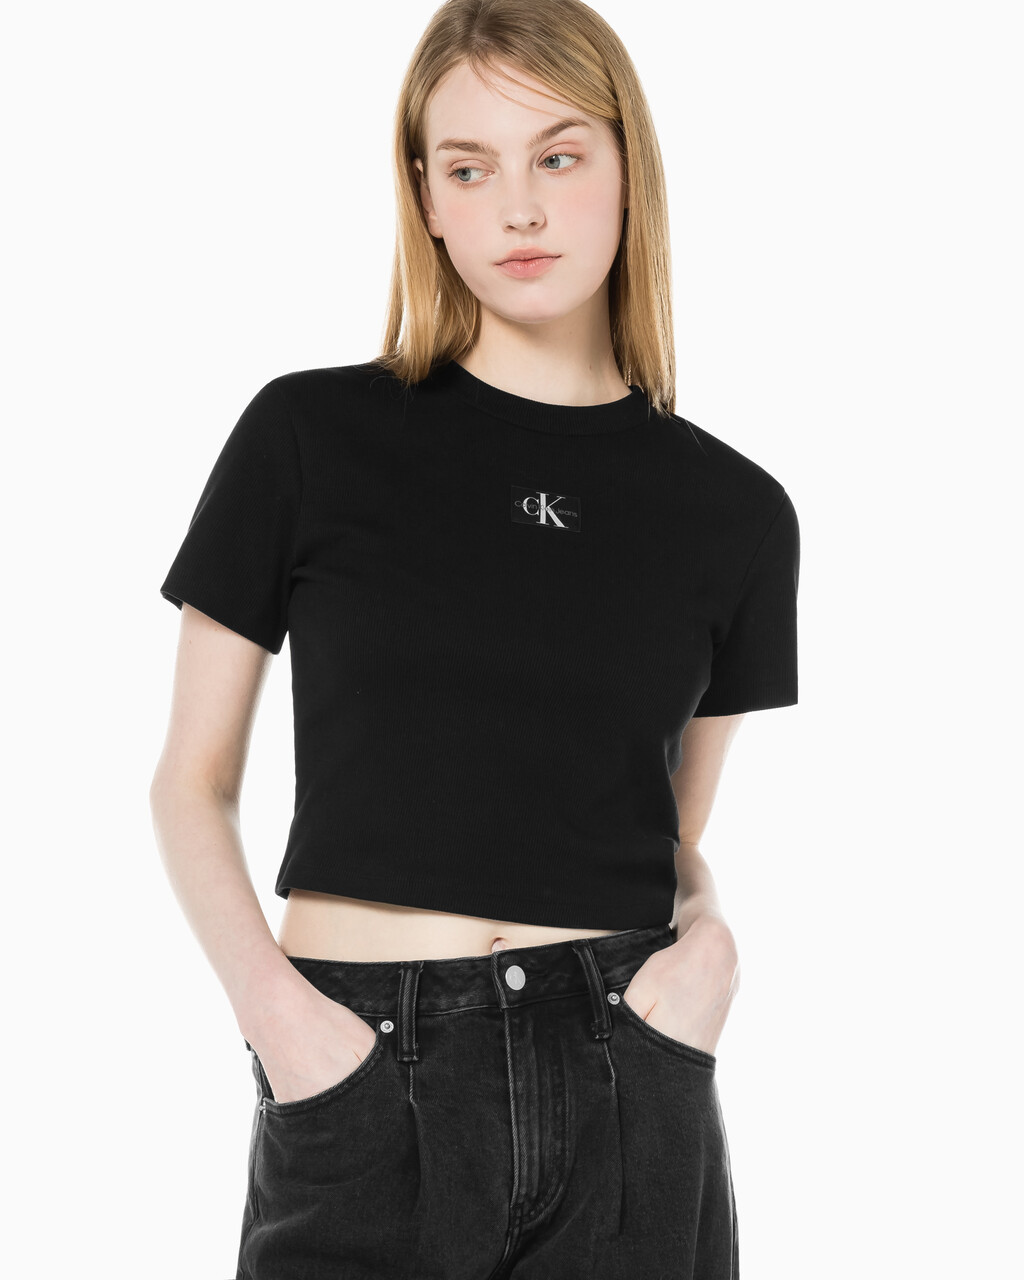 Buy 여성 로고 뱃지 크롭 반팔 티셔츠 in color CK BLACK